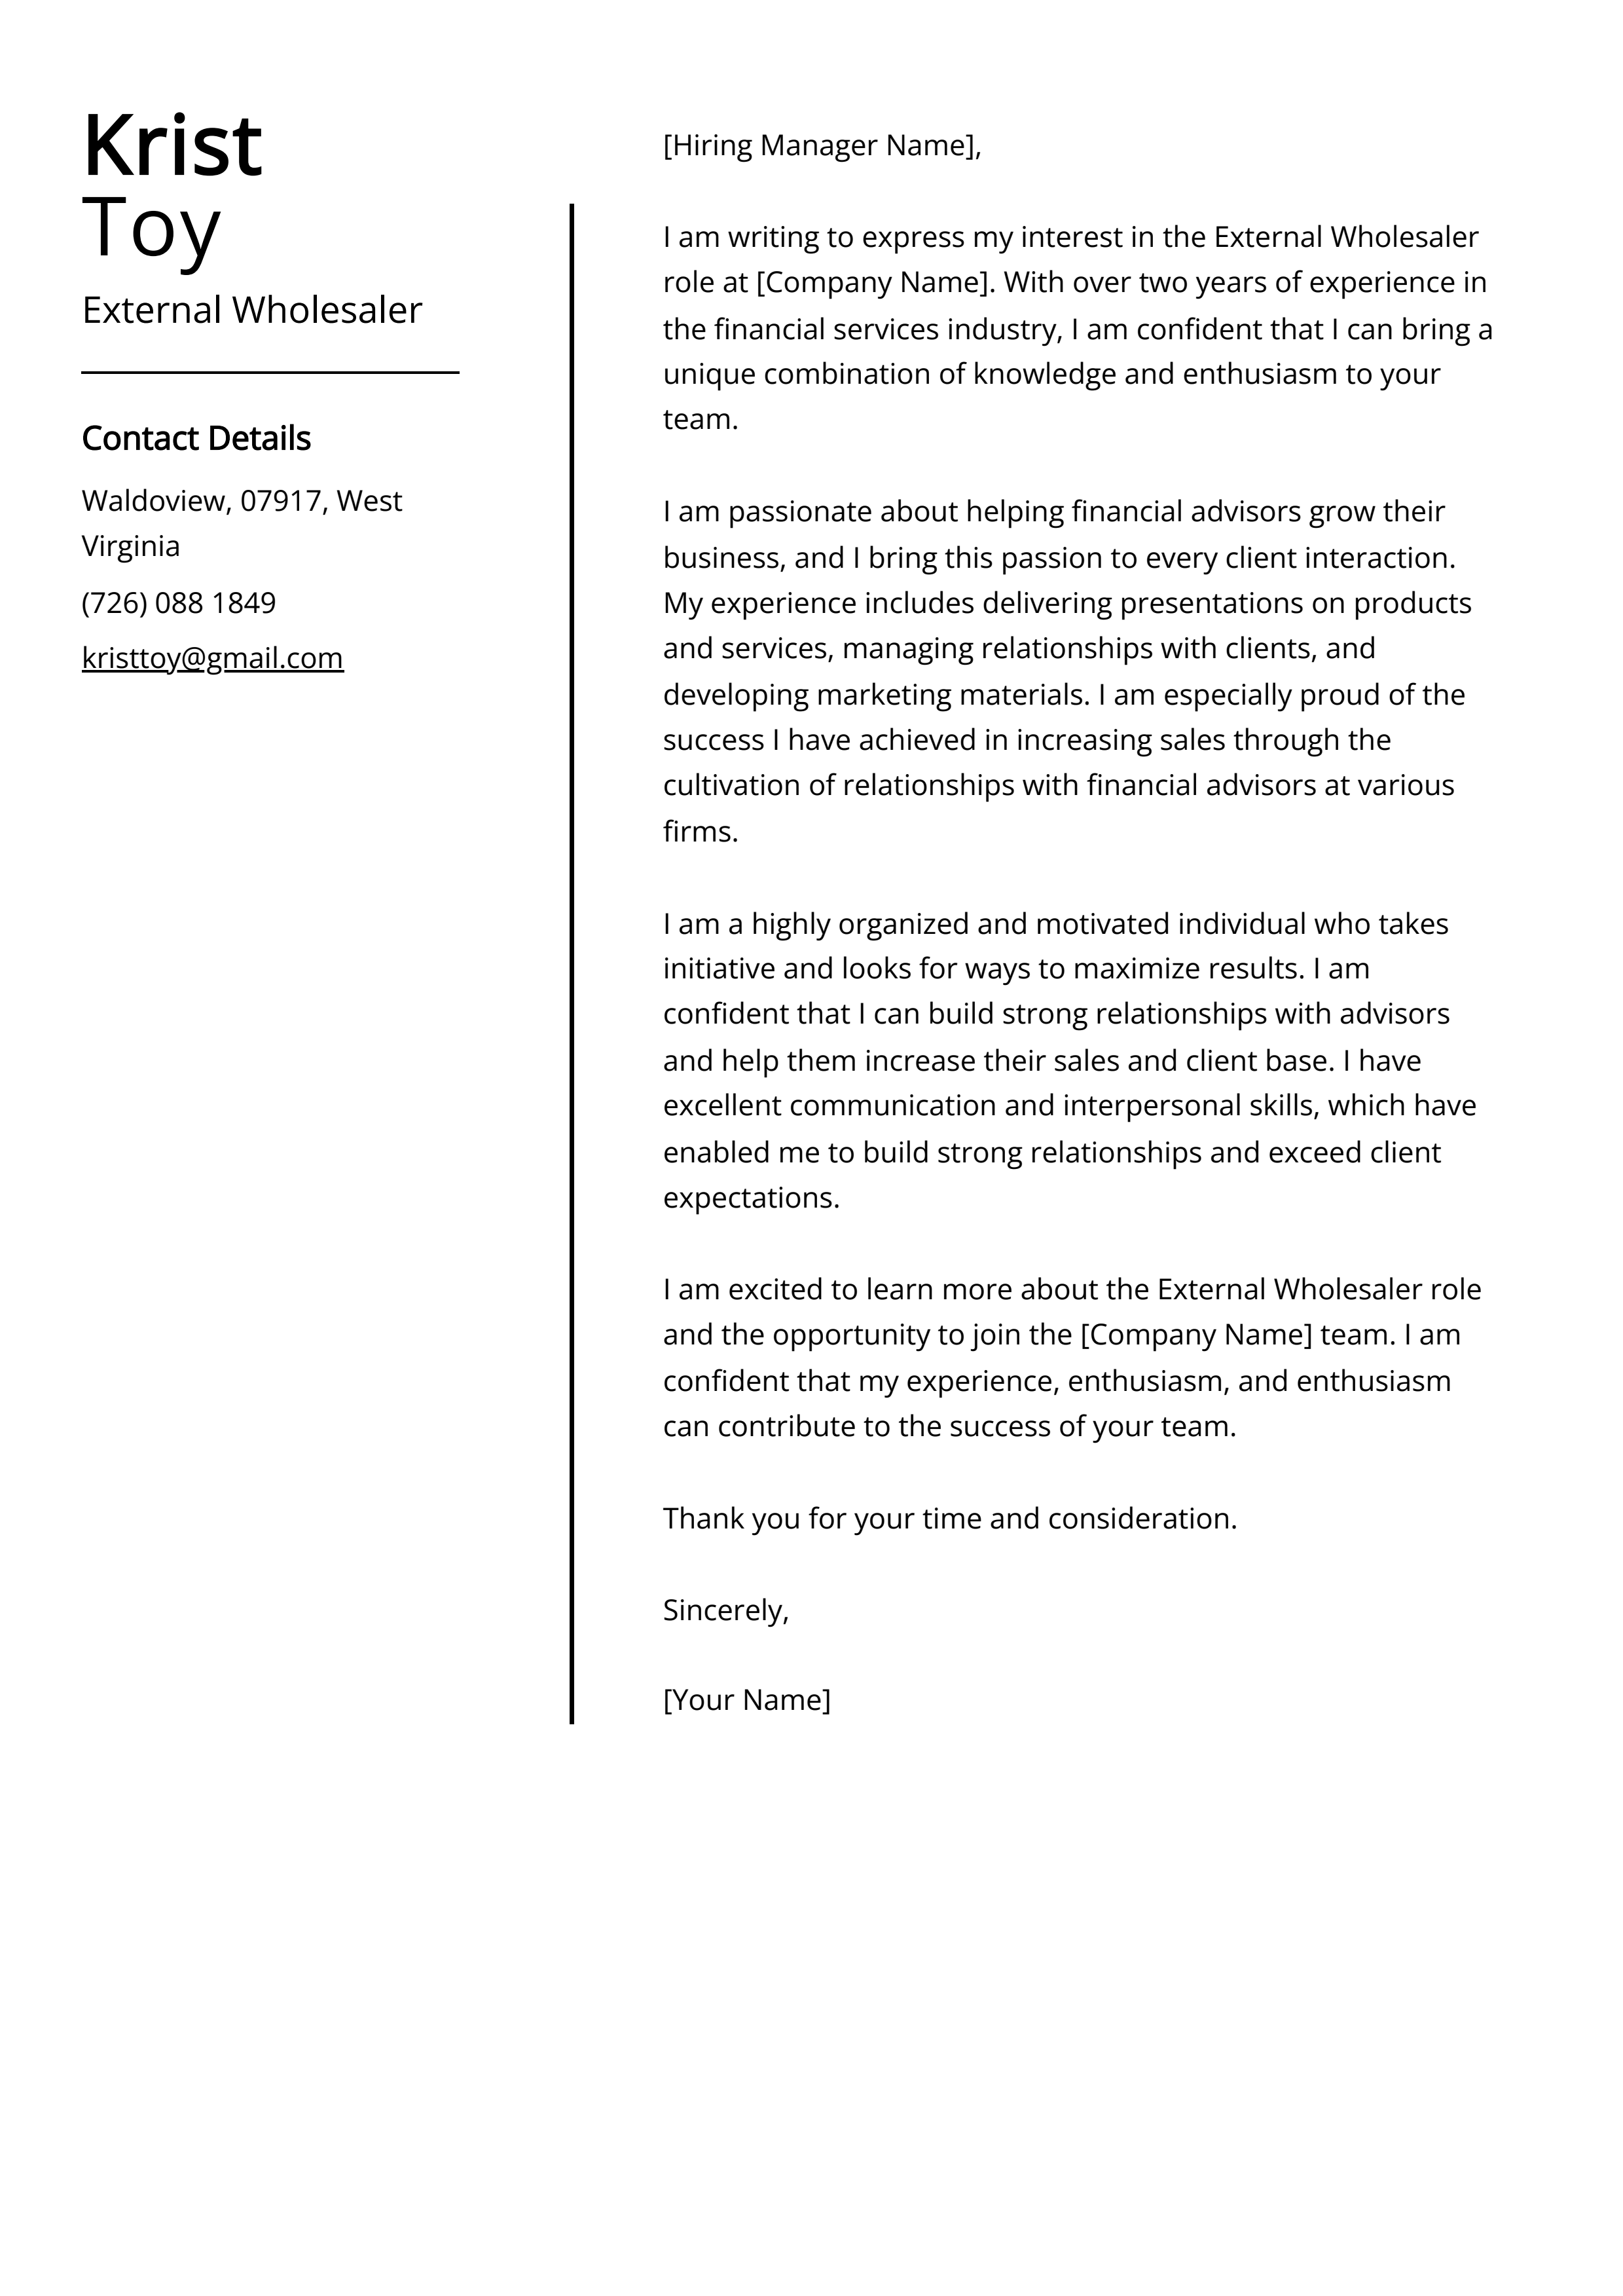 External Wholesaler Cover Letter Example